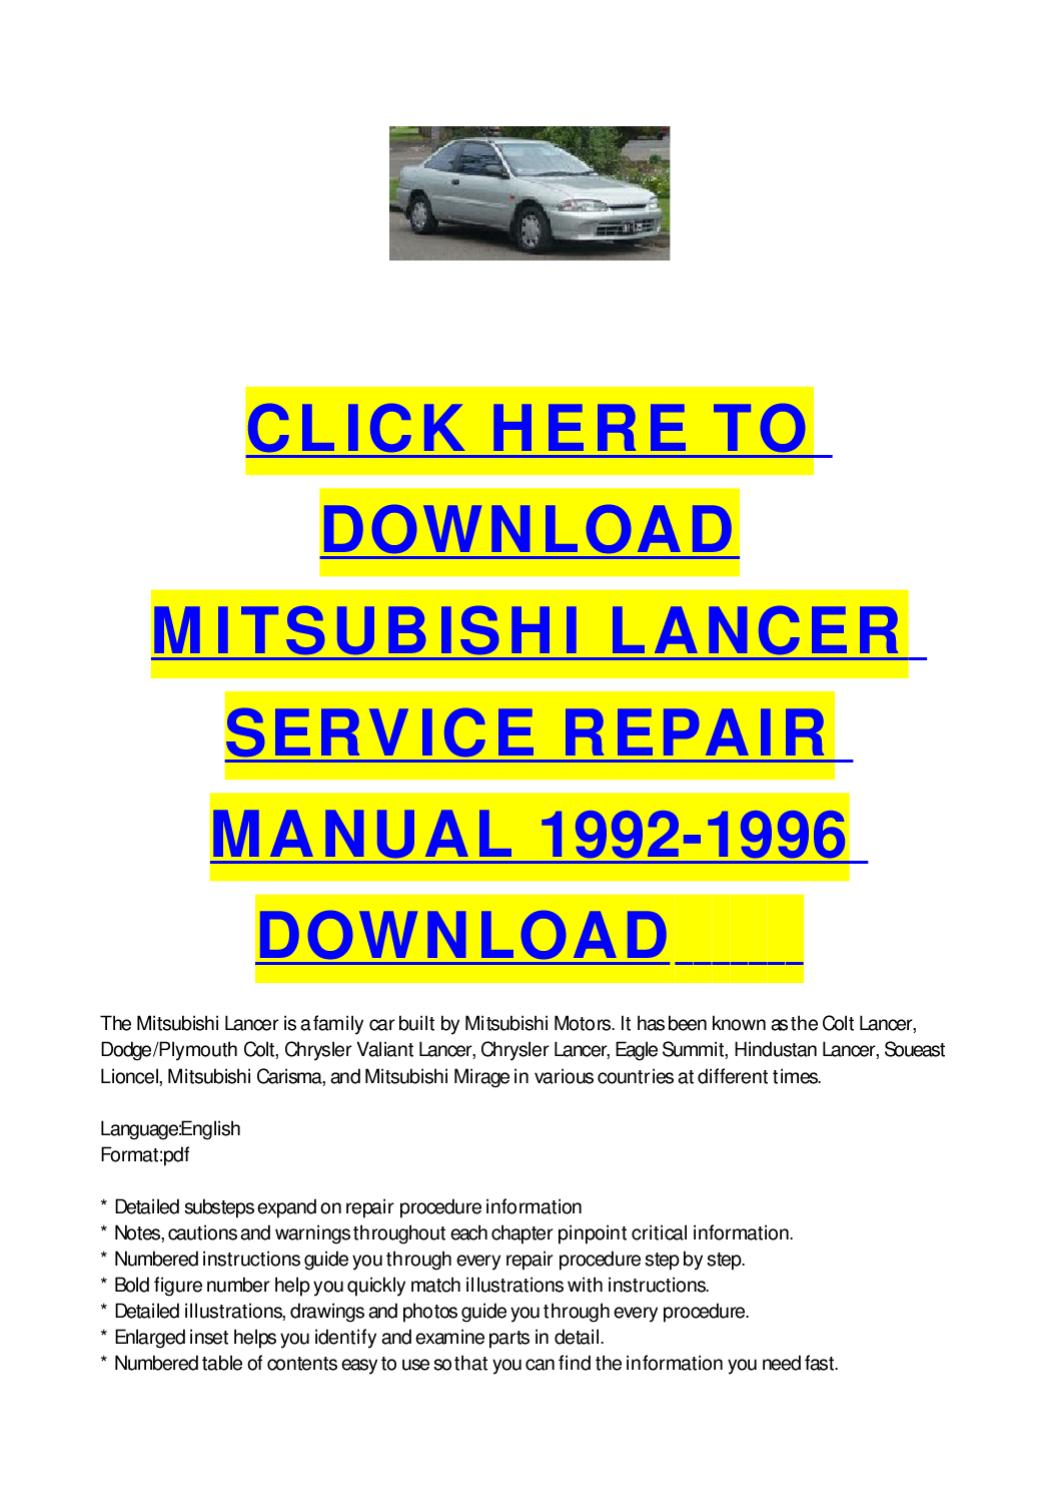 Mitsubishi owners manual download 2015